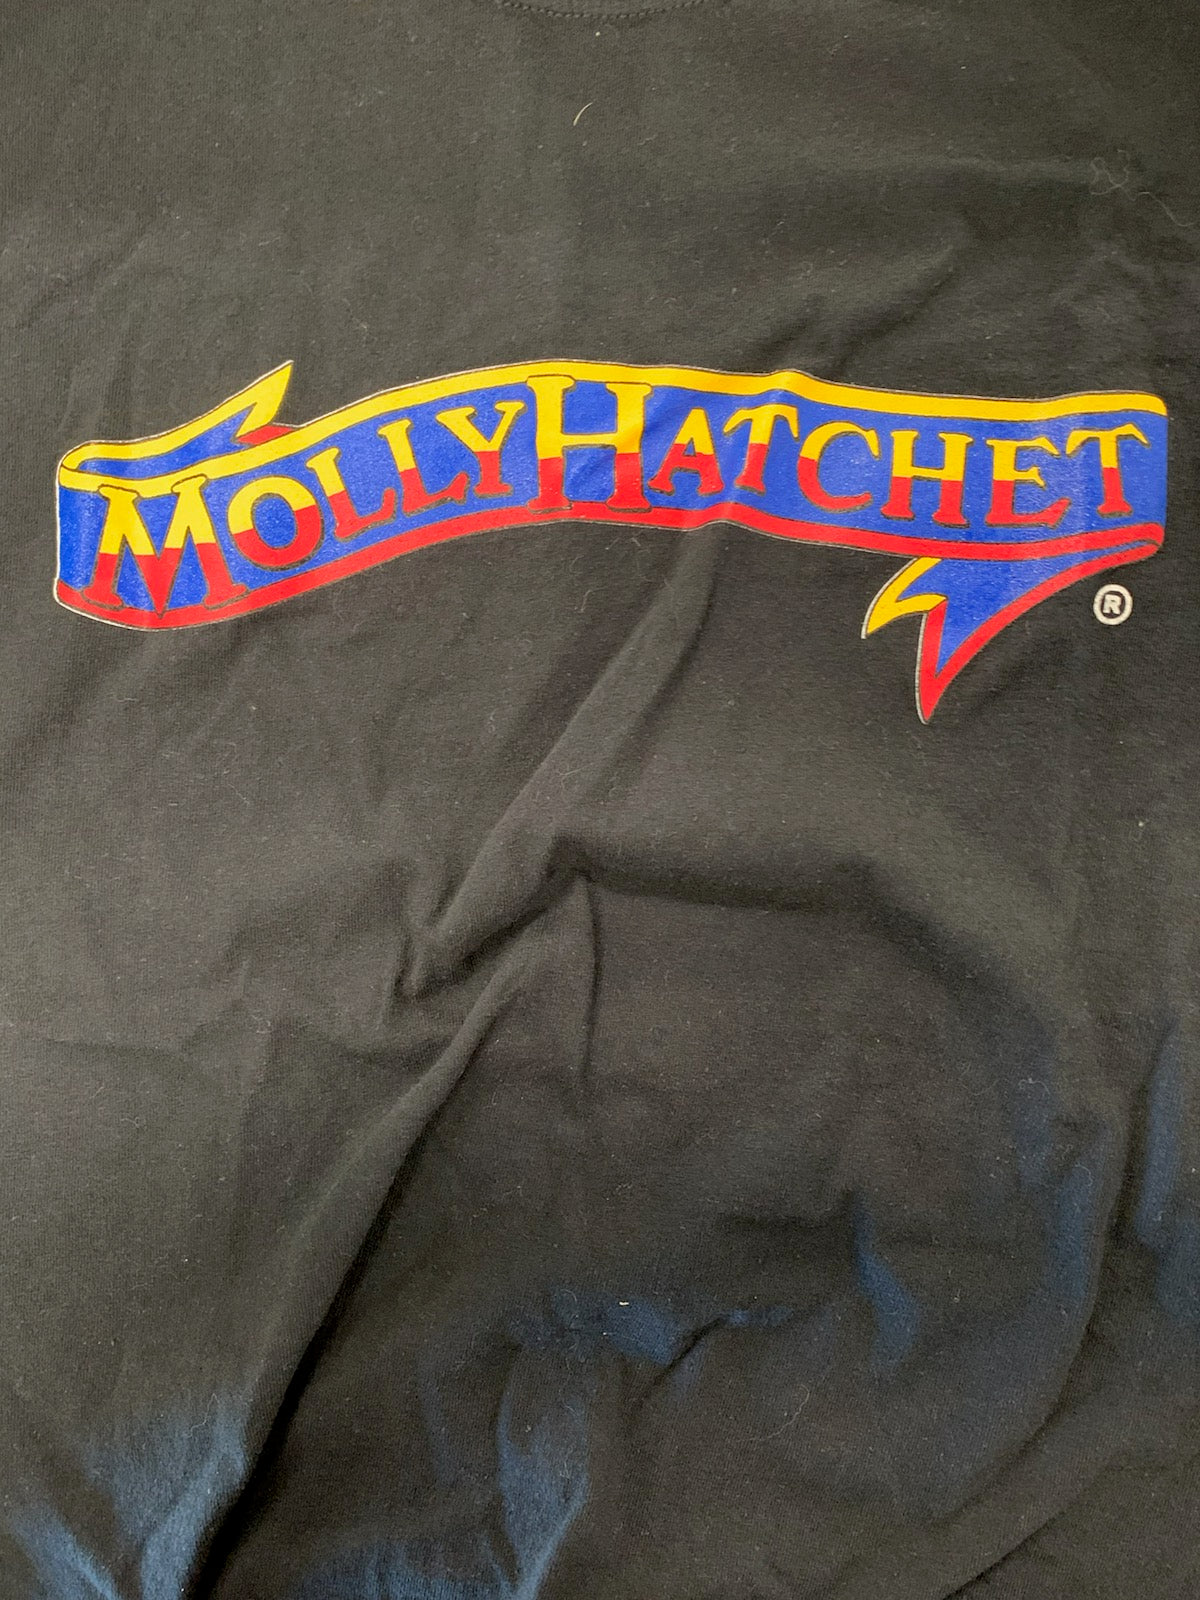 Molly Hatchet Logo Shirt, Black, L